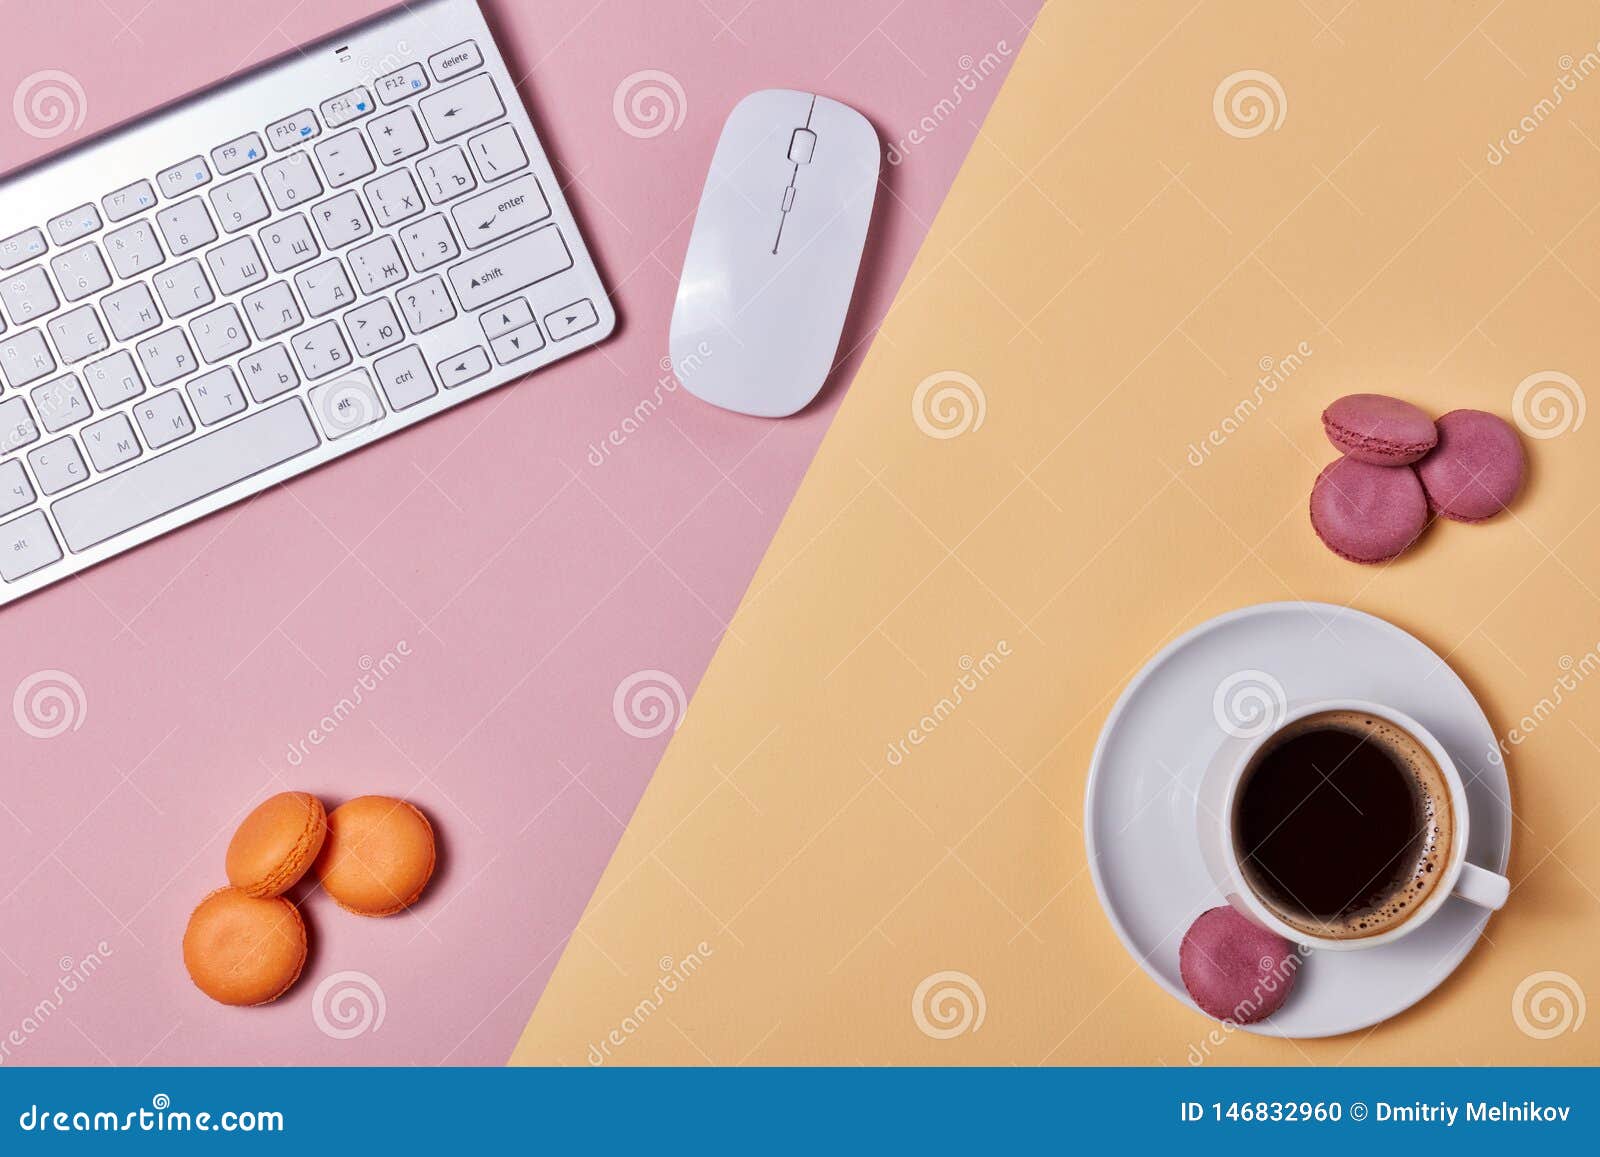 macaroons, coffee  and computer keyboard